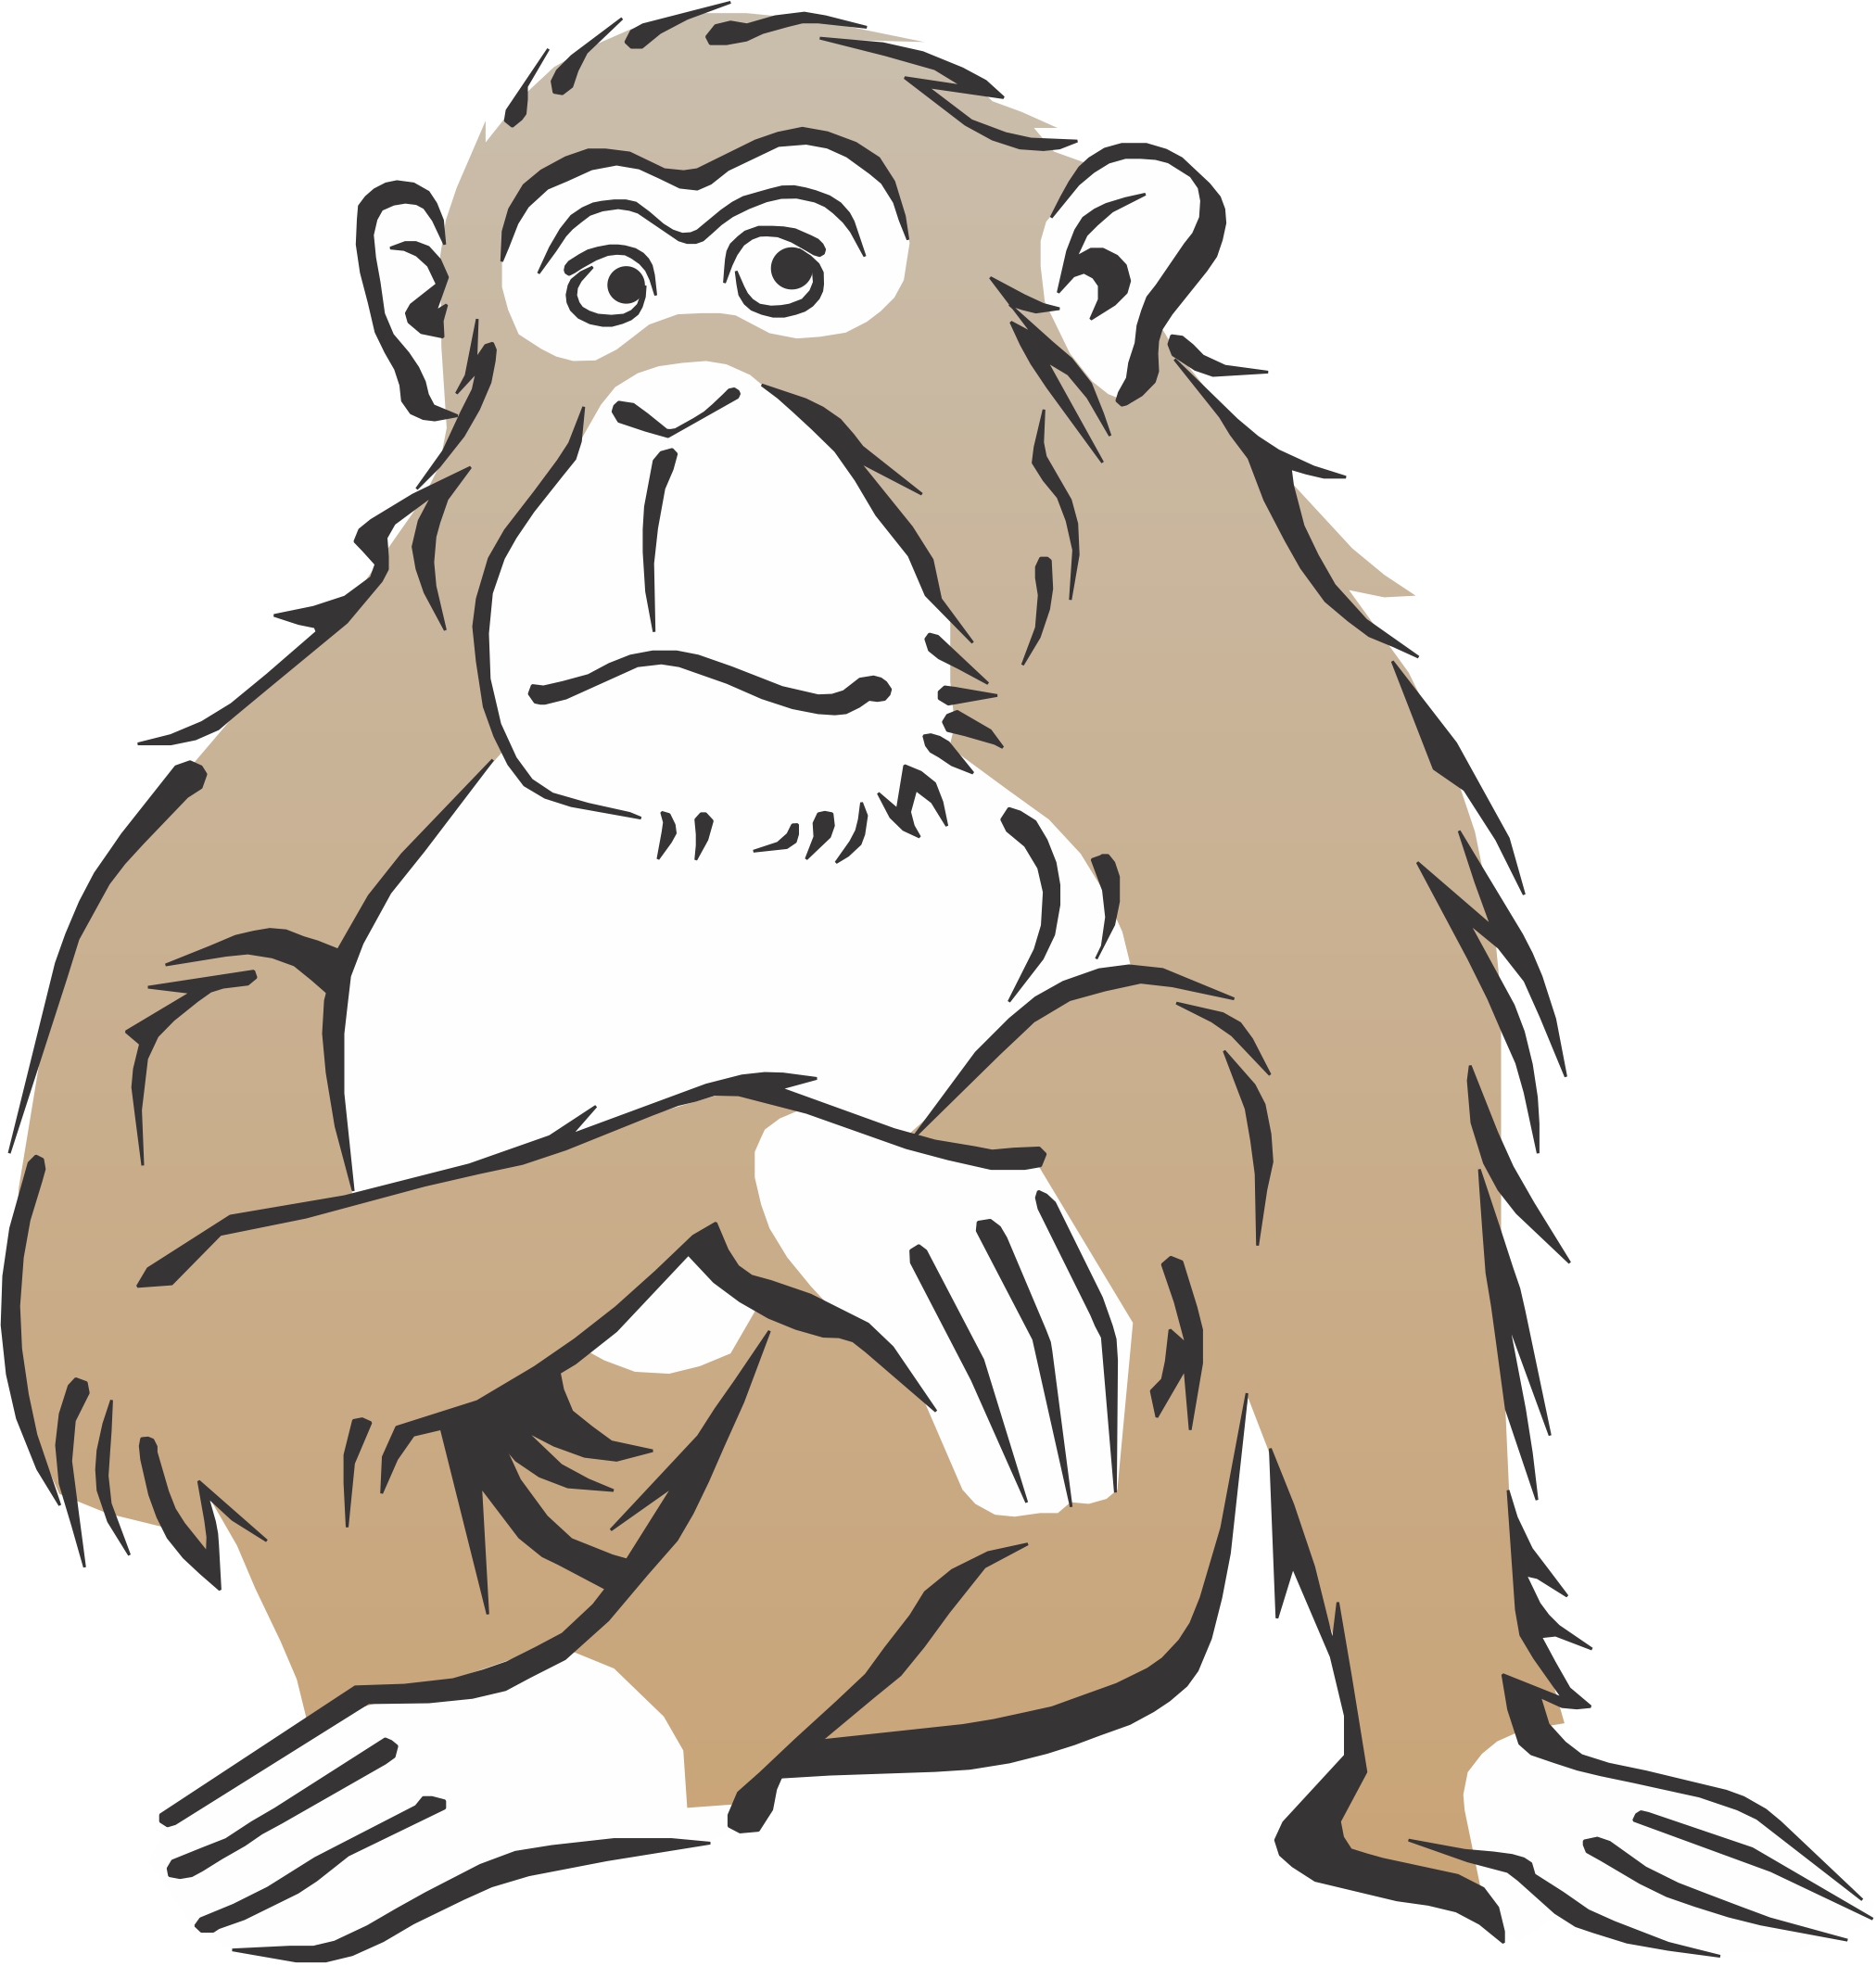 Free Cartoon Monkey Cliparts, Download Free Cartoon Monkey Cliparts png